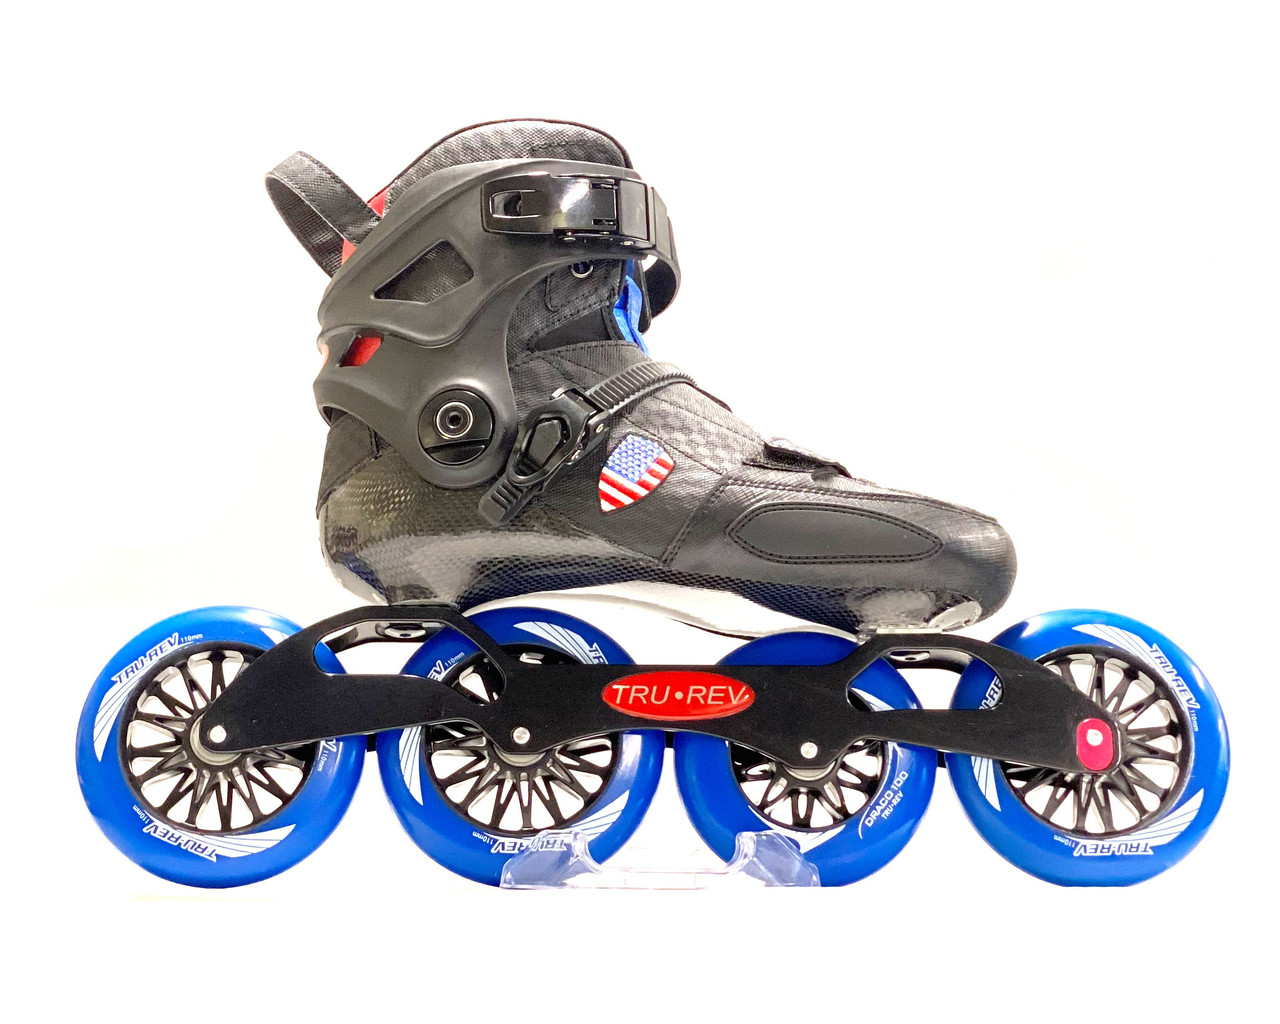 8 Draco wheels 100mm Inline Skate Wheels for fitness & speed by Trurev 